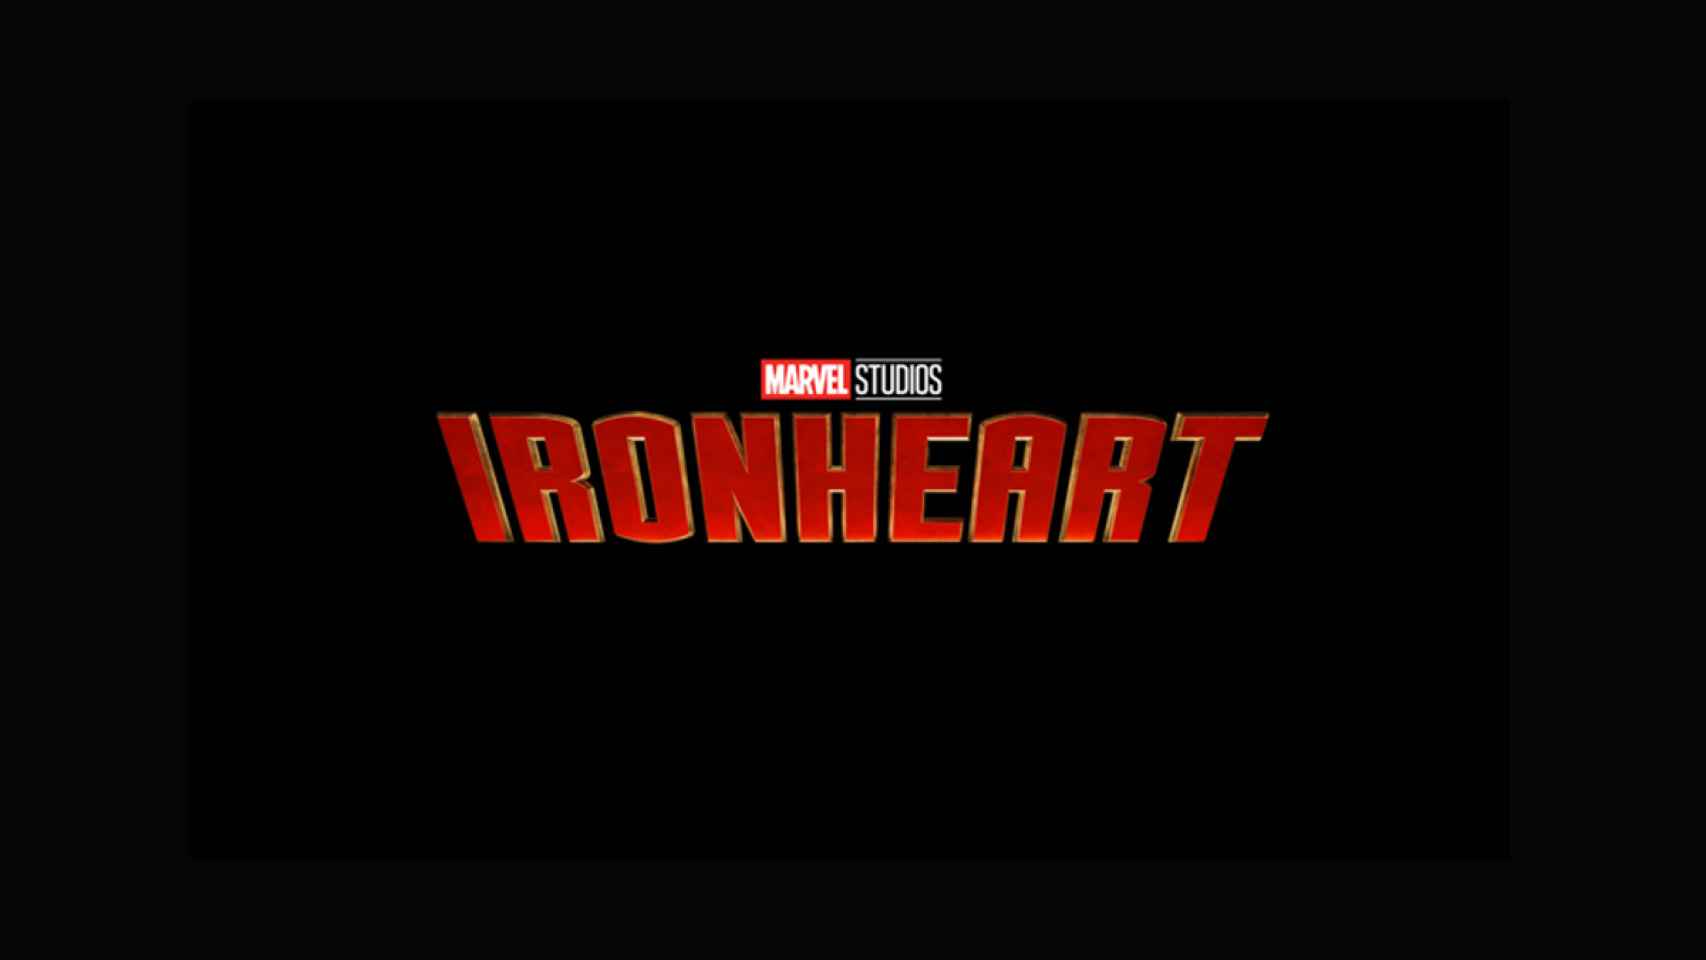 'Ironheart', cartel promocional.